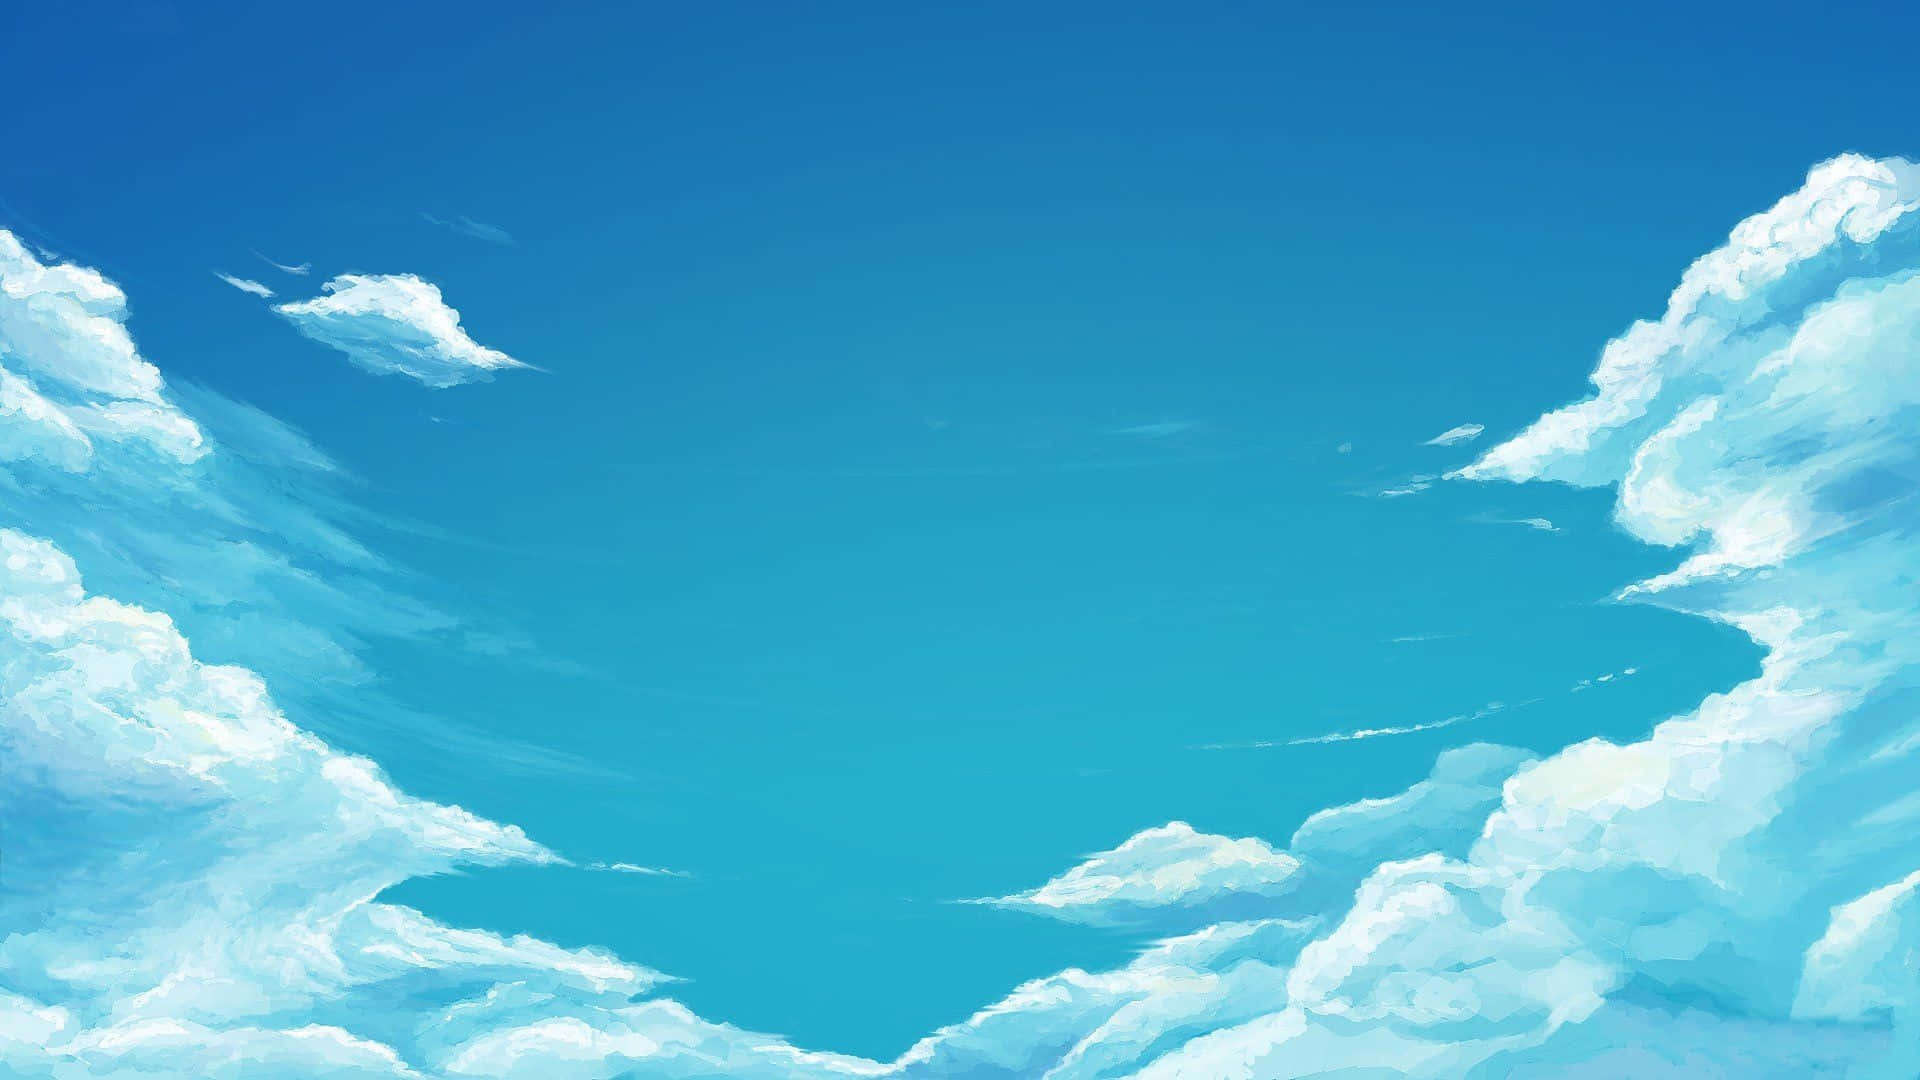 Unending Horizons Of A Royal Blue Anime Sky